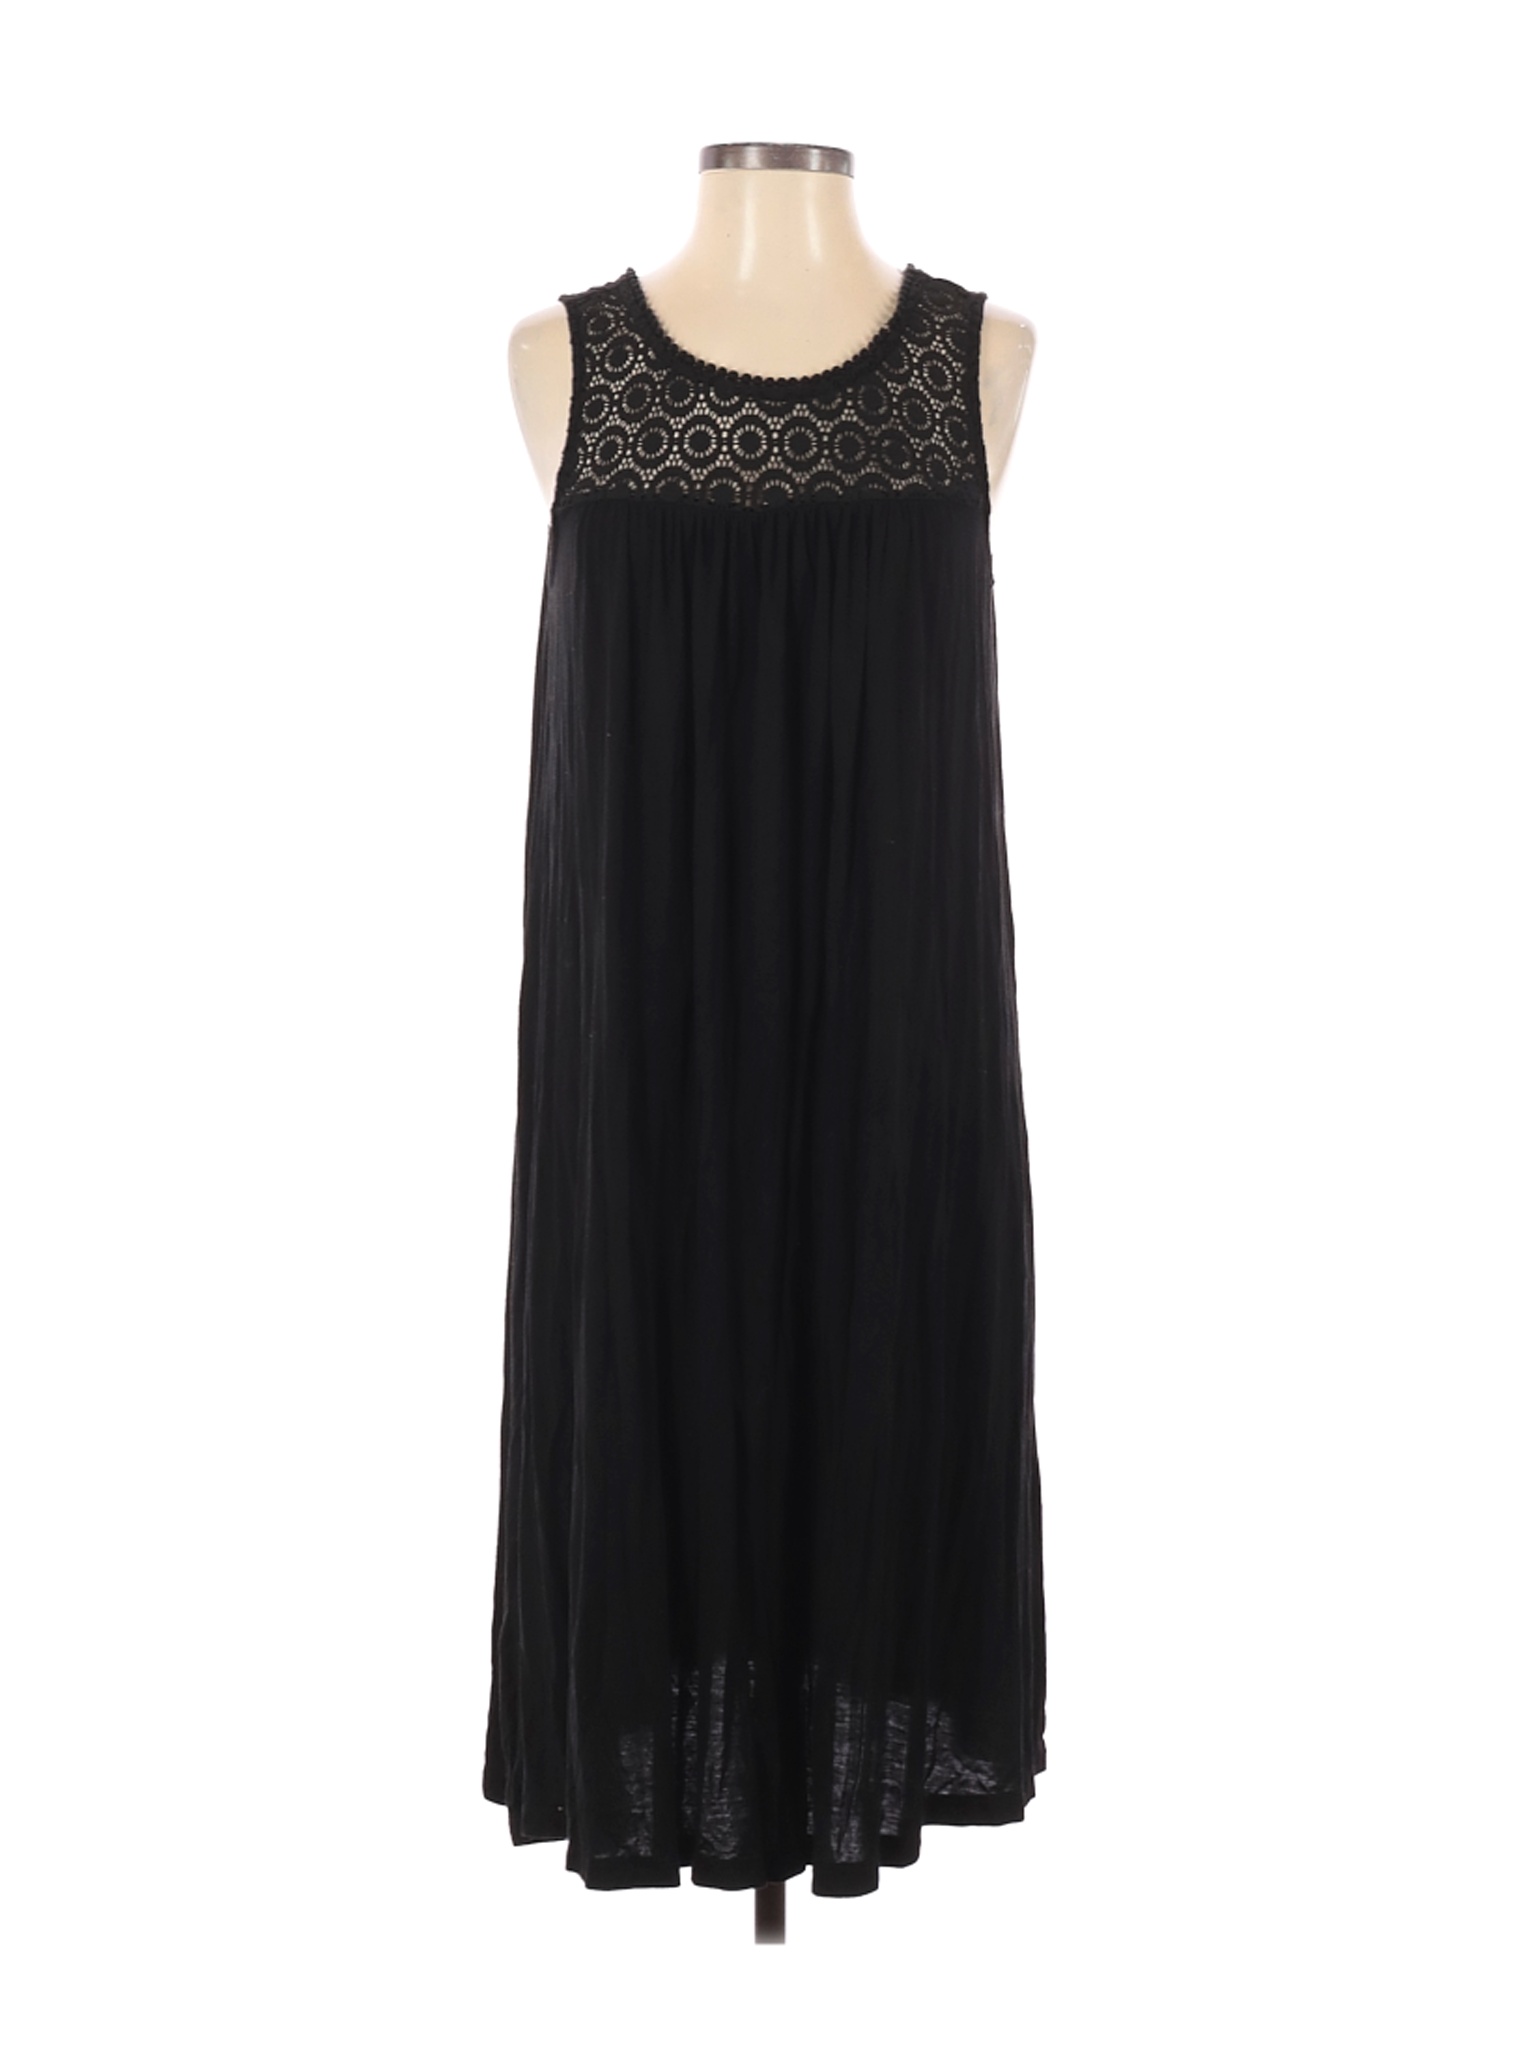 Signature collection Women Black Casual Dress M | eBay